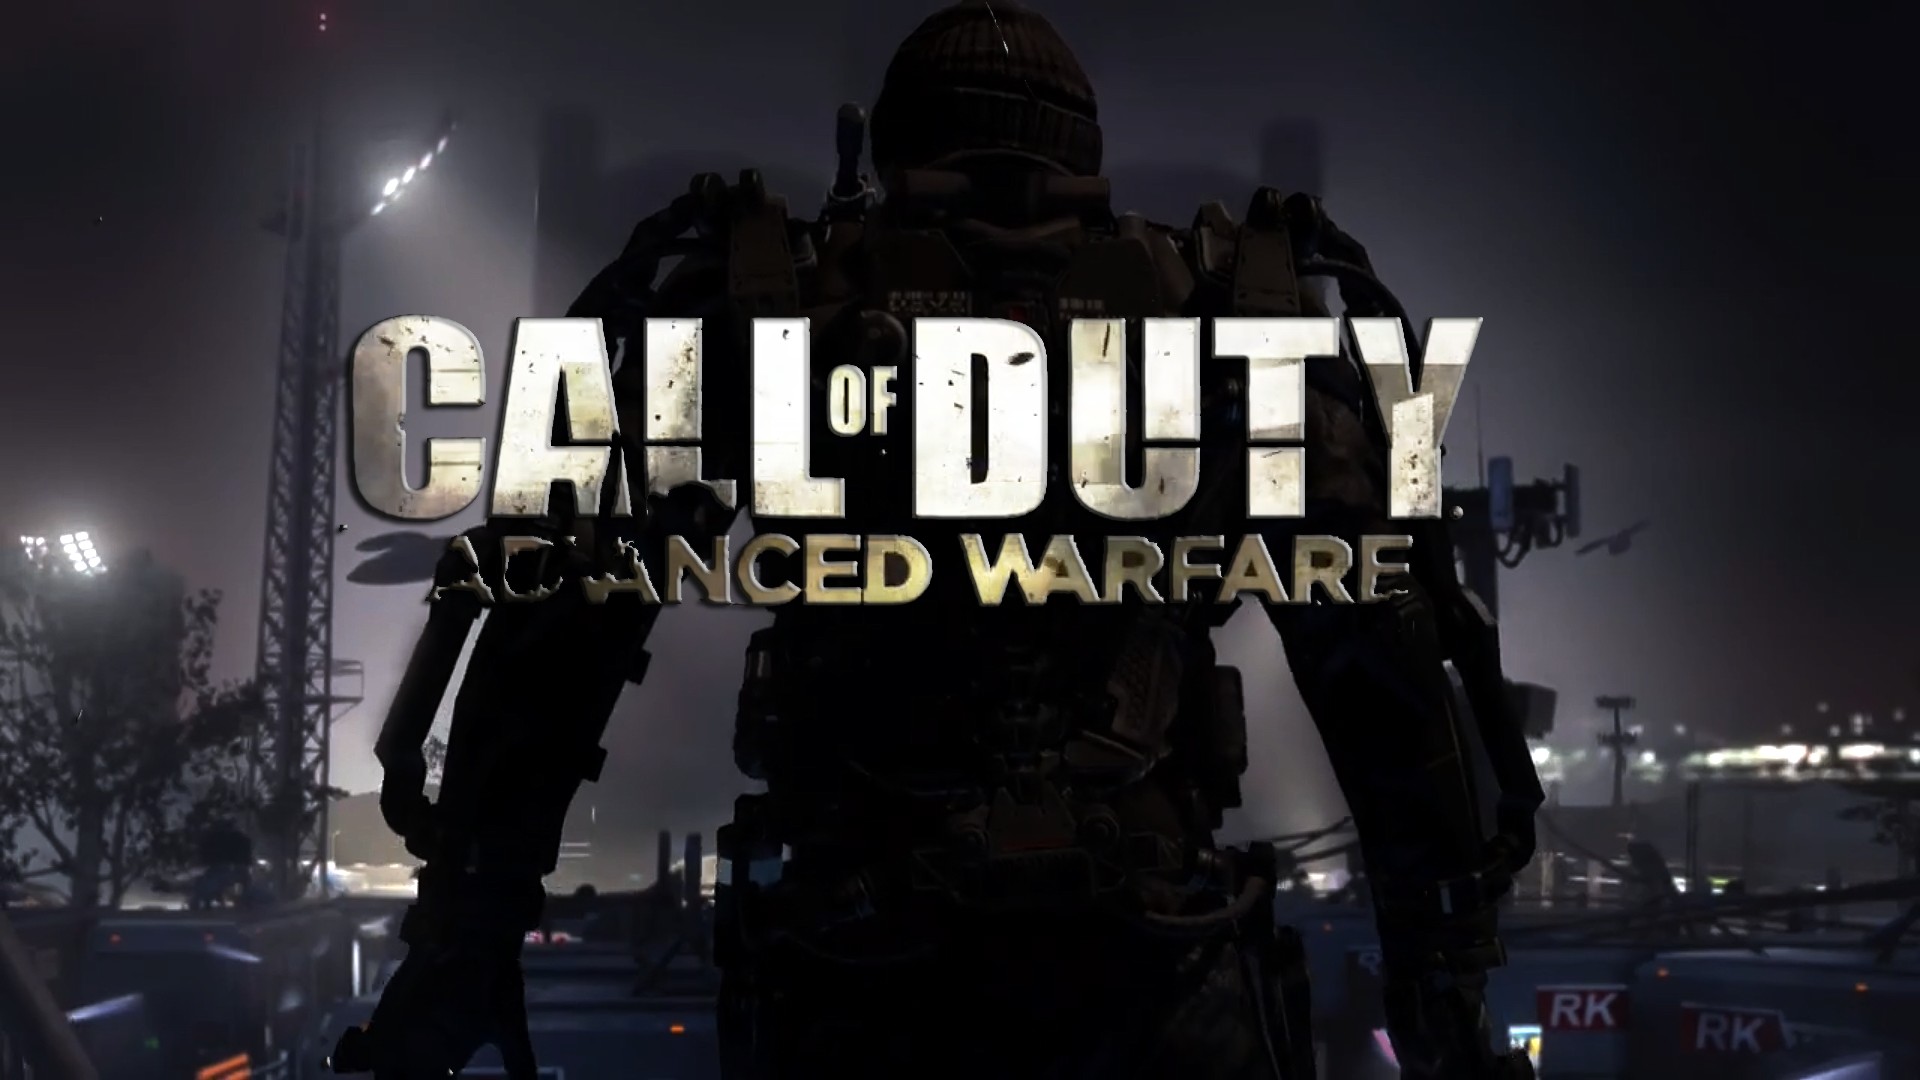 Call Of Duty Advanced Warfare Wallpaper Desktop With